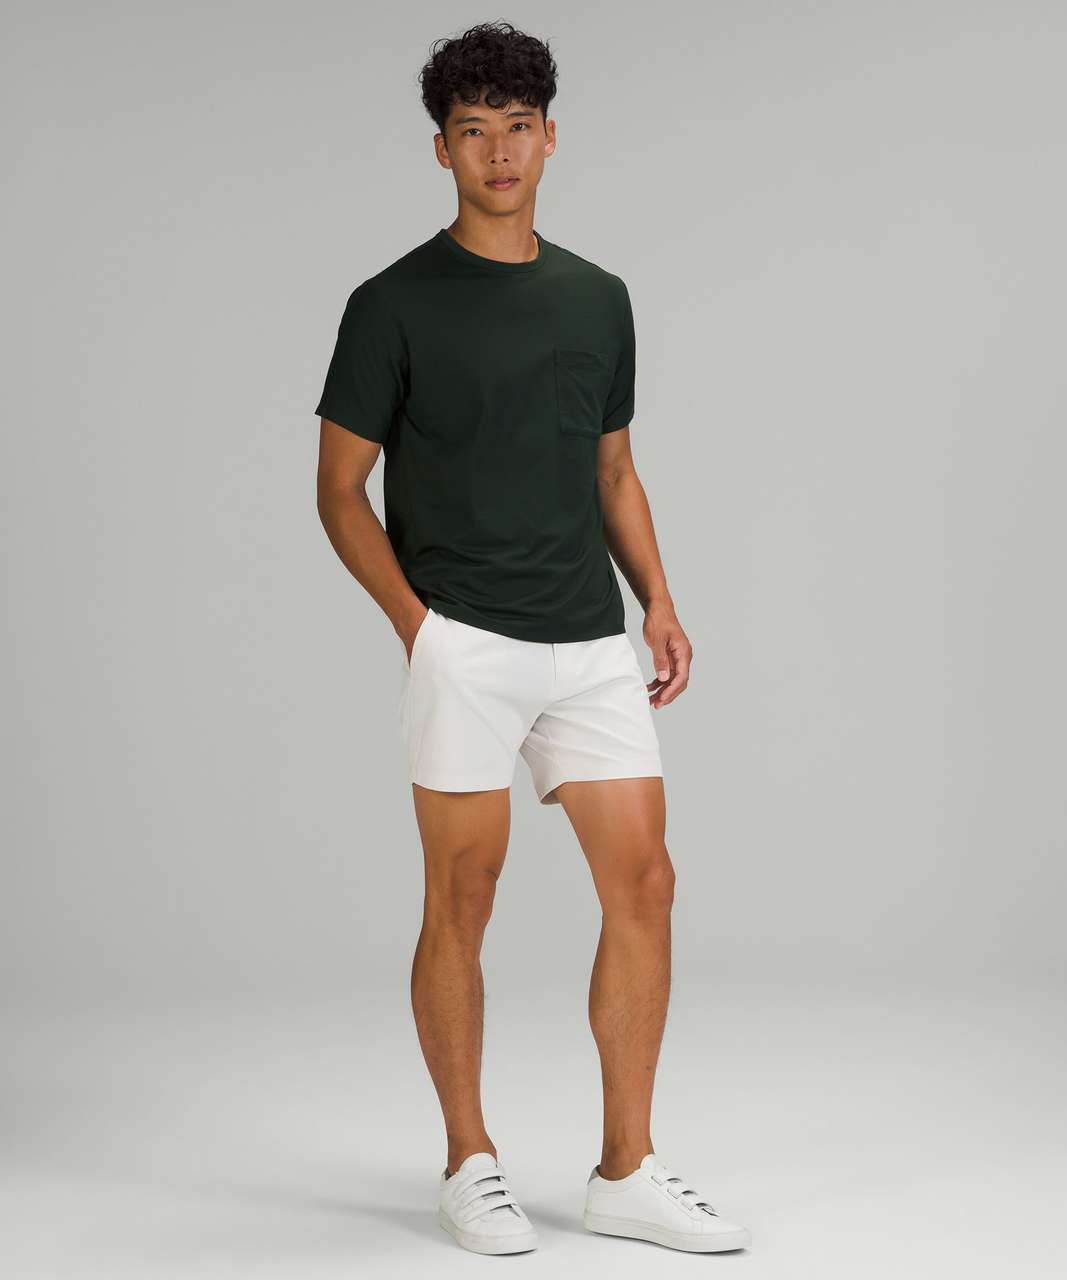 Lululemon The Fundamental Pocket T-Shirt - Rainforest Green